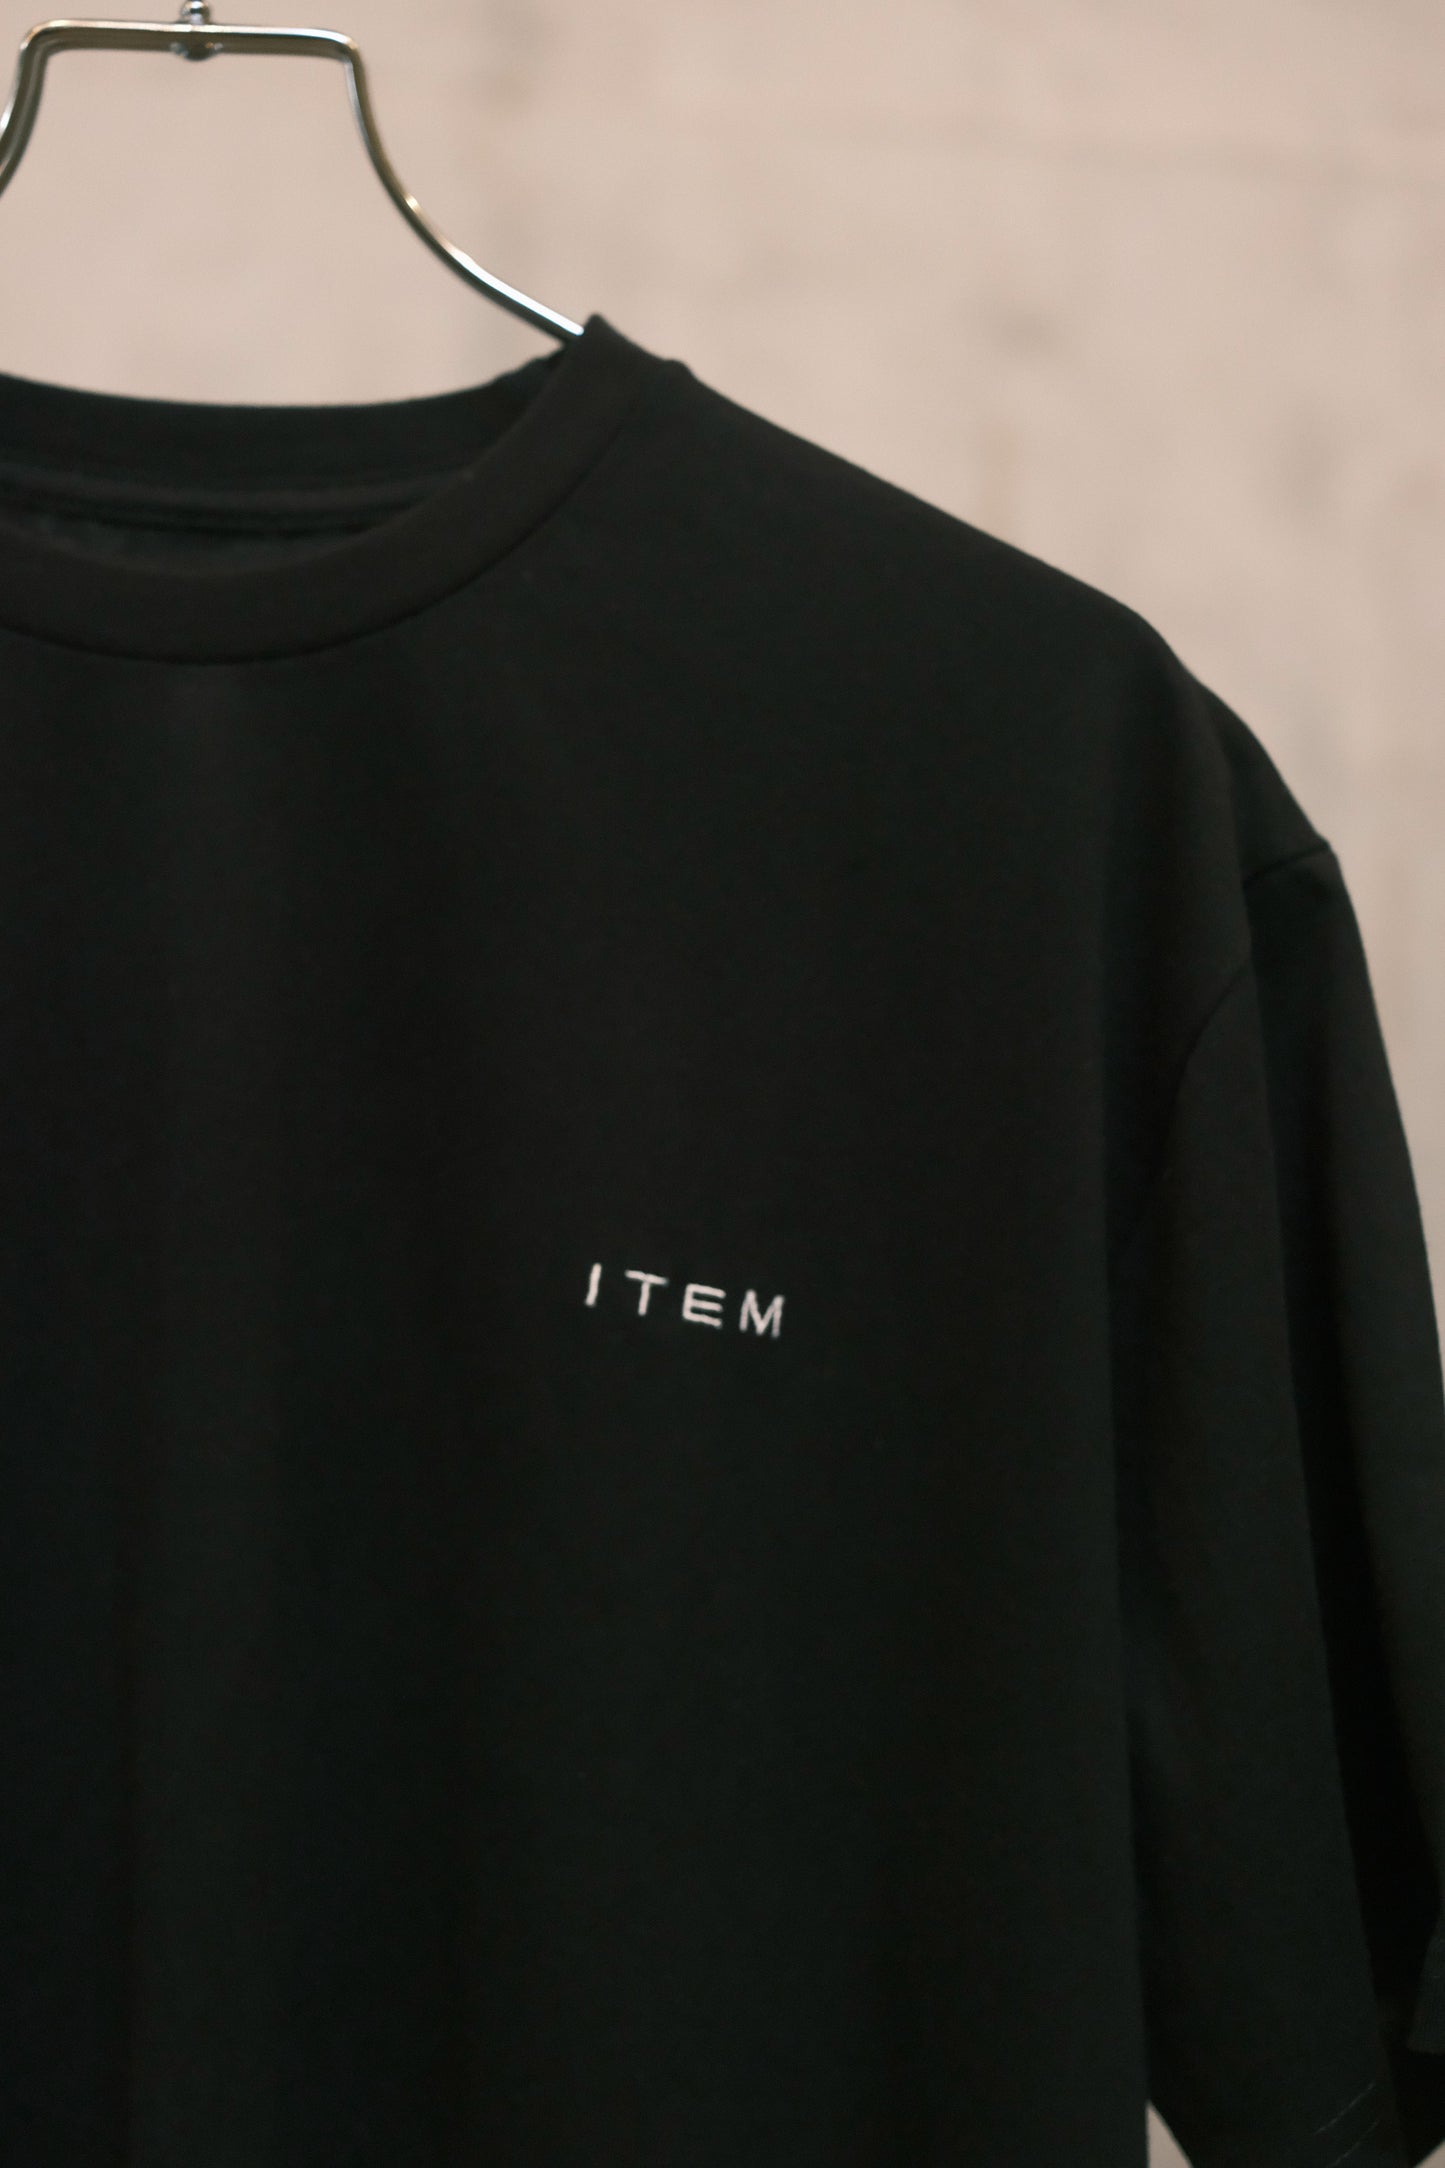 item logo tee (black)